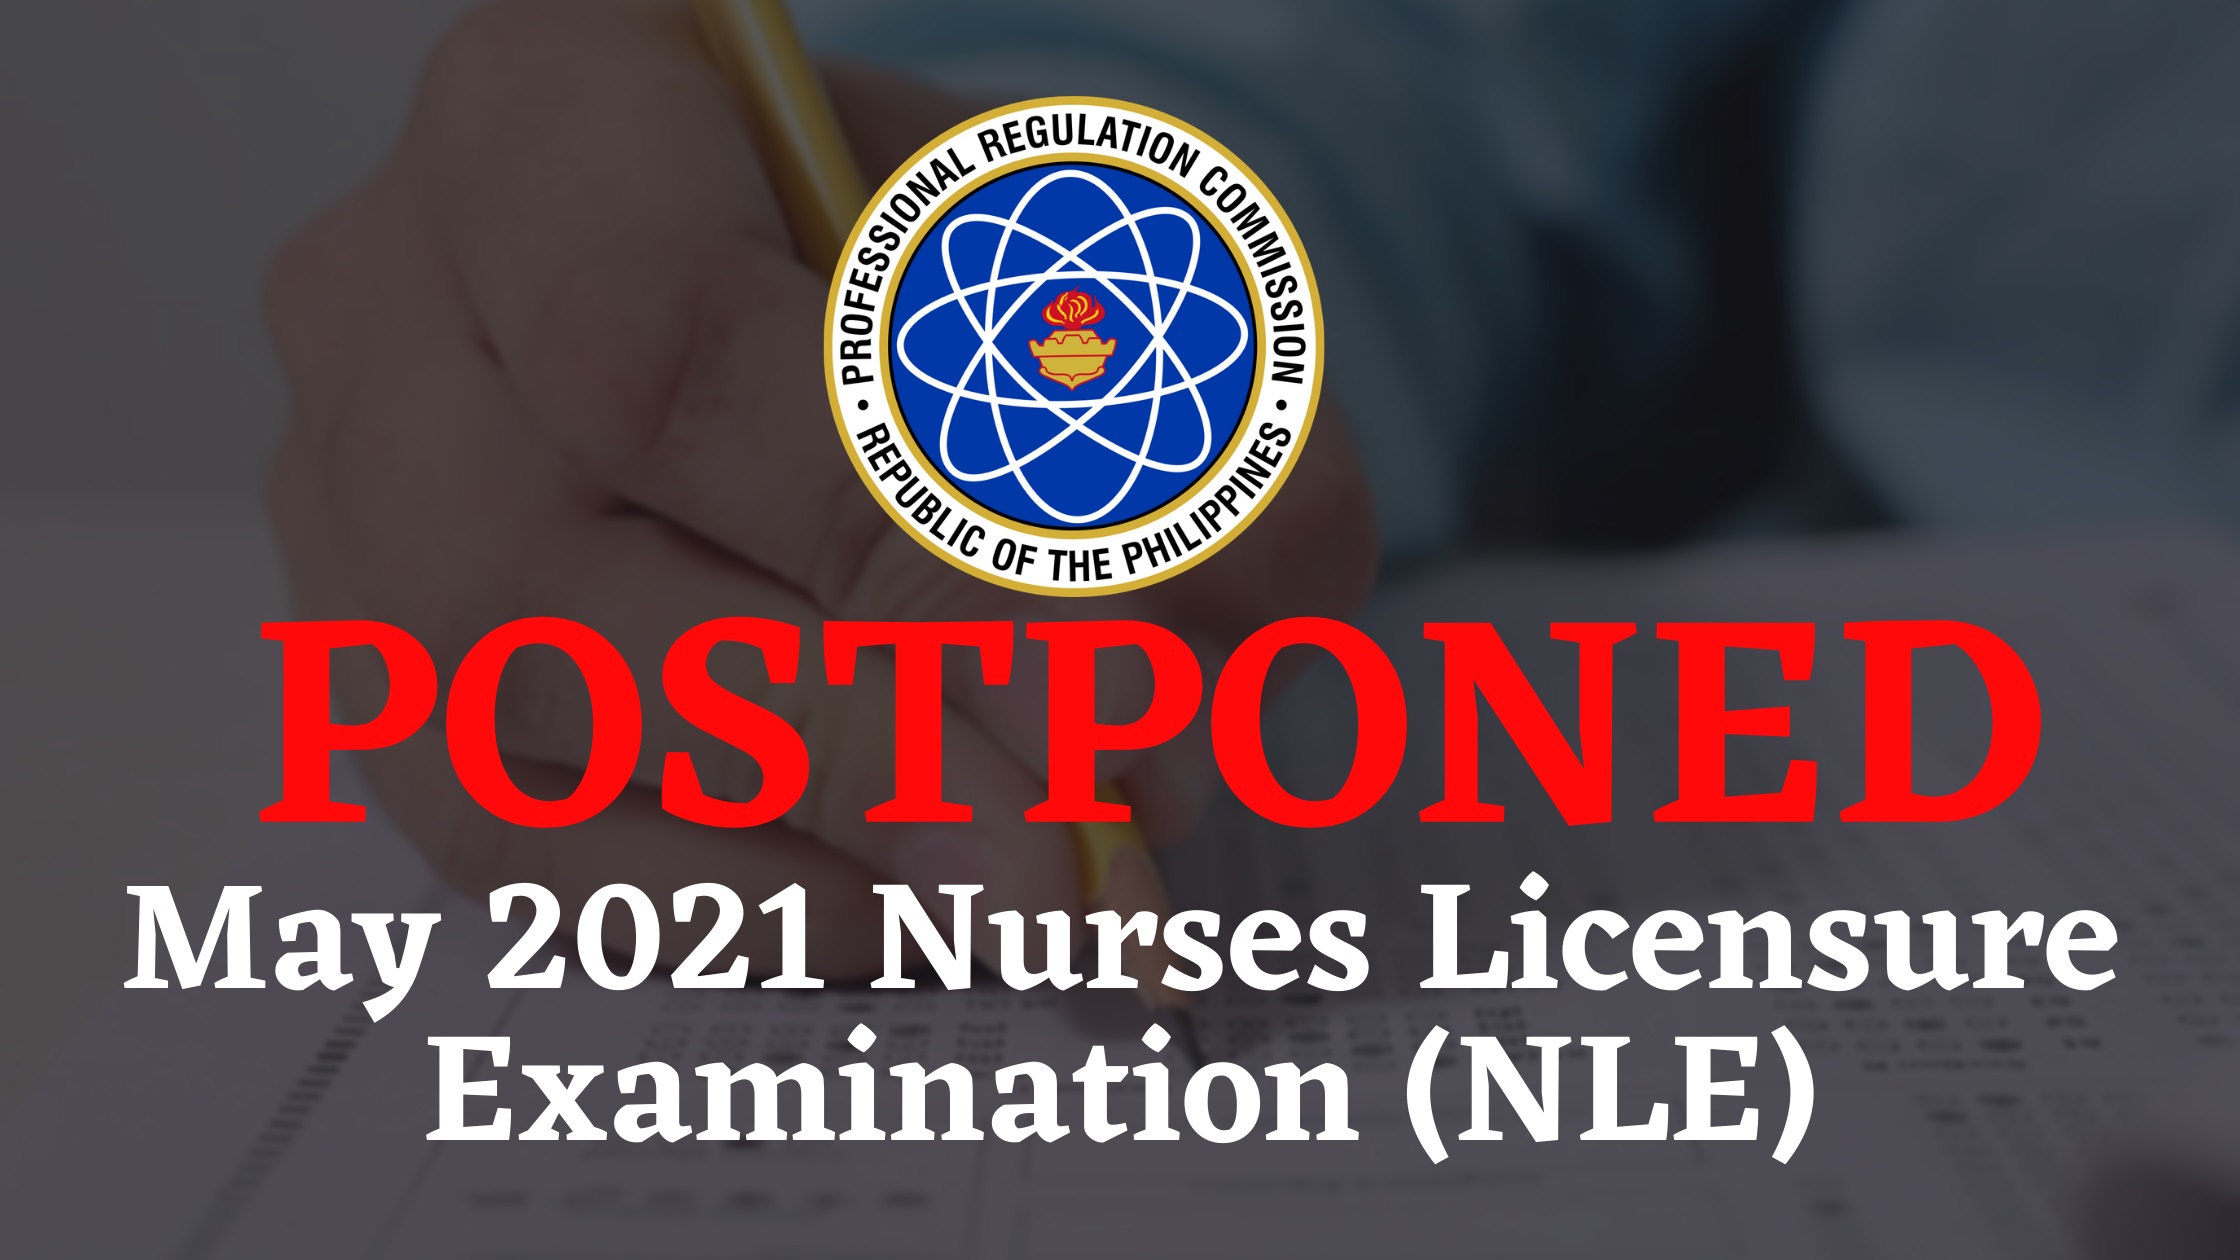 Postponed May 2021 Nurses Licensure Examination (NLE), new schedule